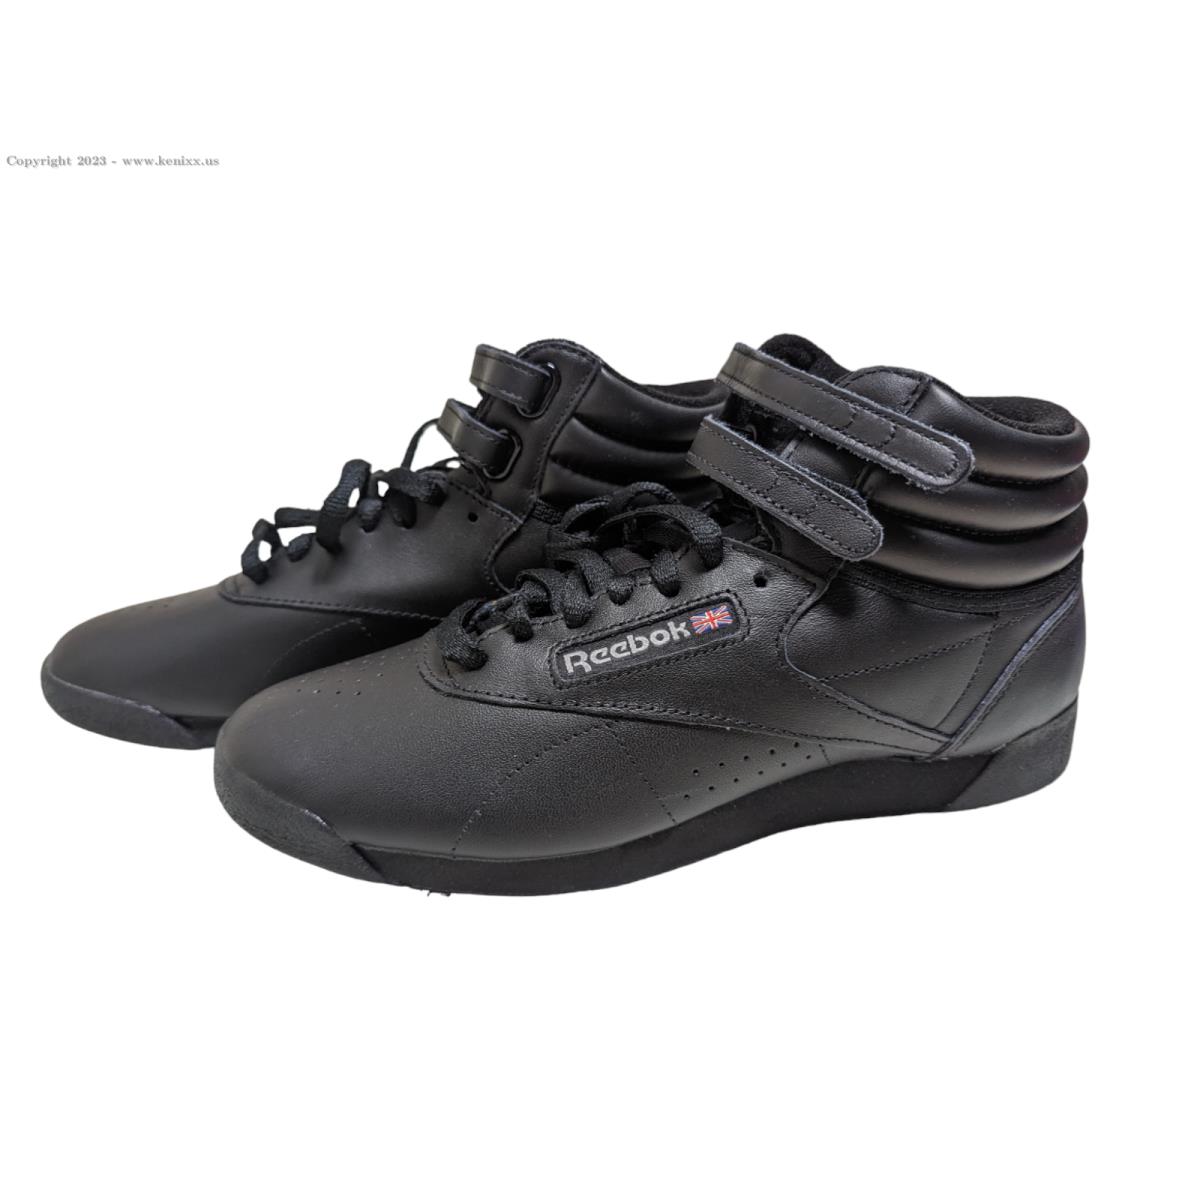 US Size 8 1/2 Reebok Freestyle Hi 5411 Ltd Women Casual Shoe Black - White Ivory Beige